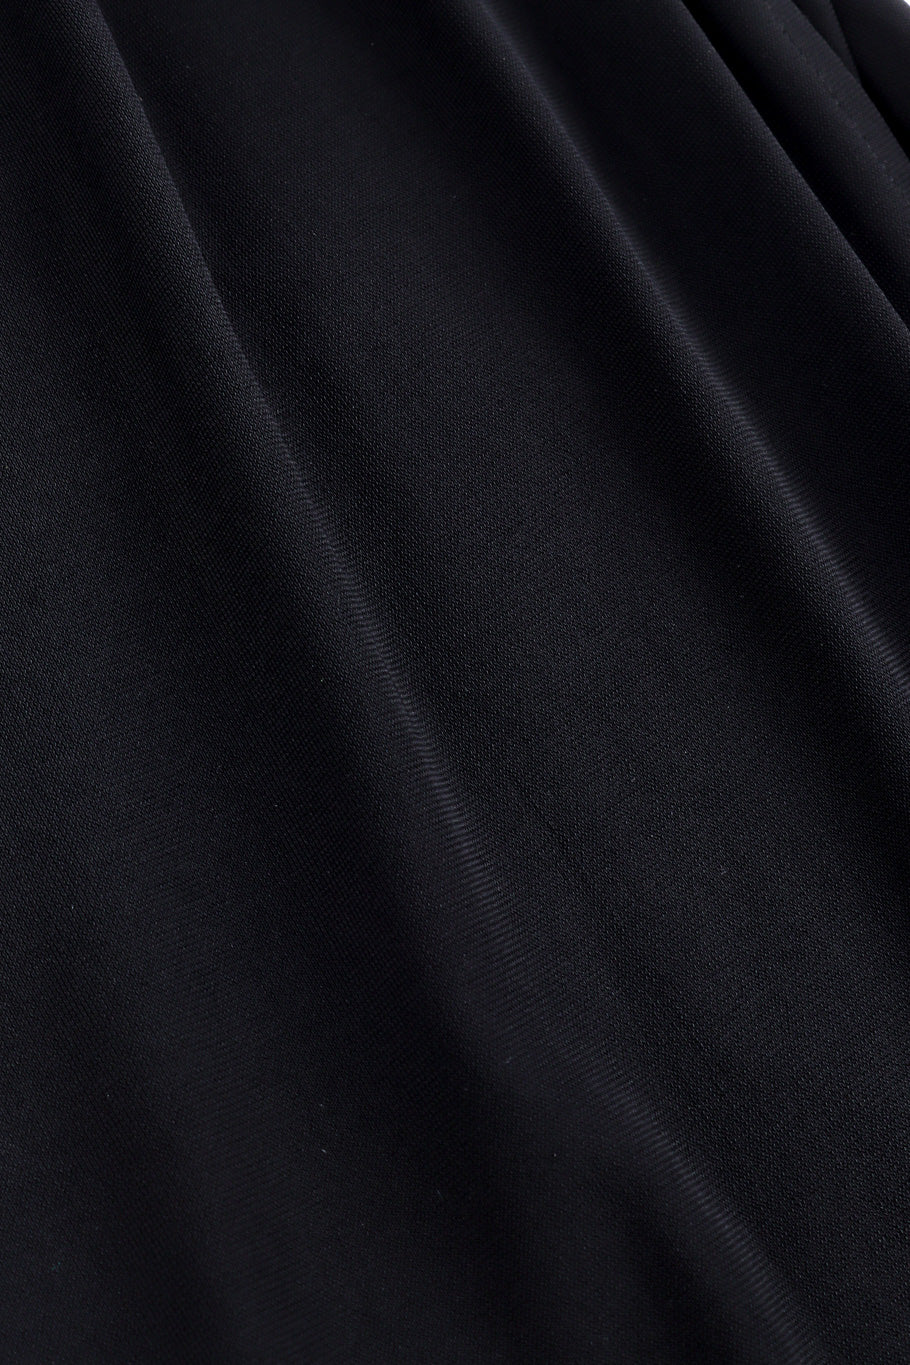 Valentino one shoulder sequin gown fabric details @recessla